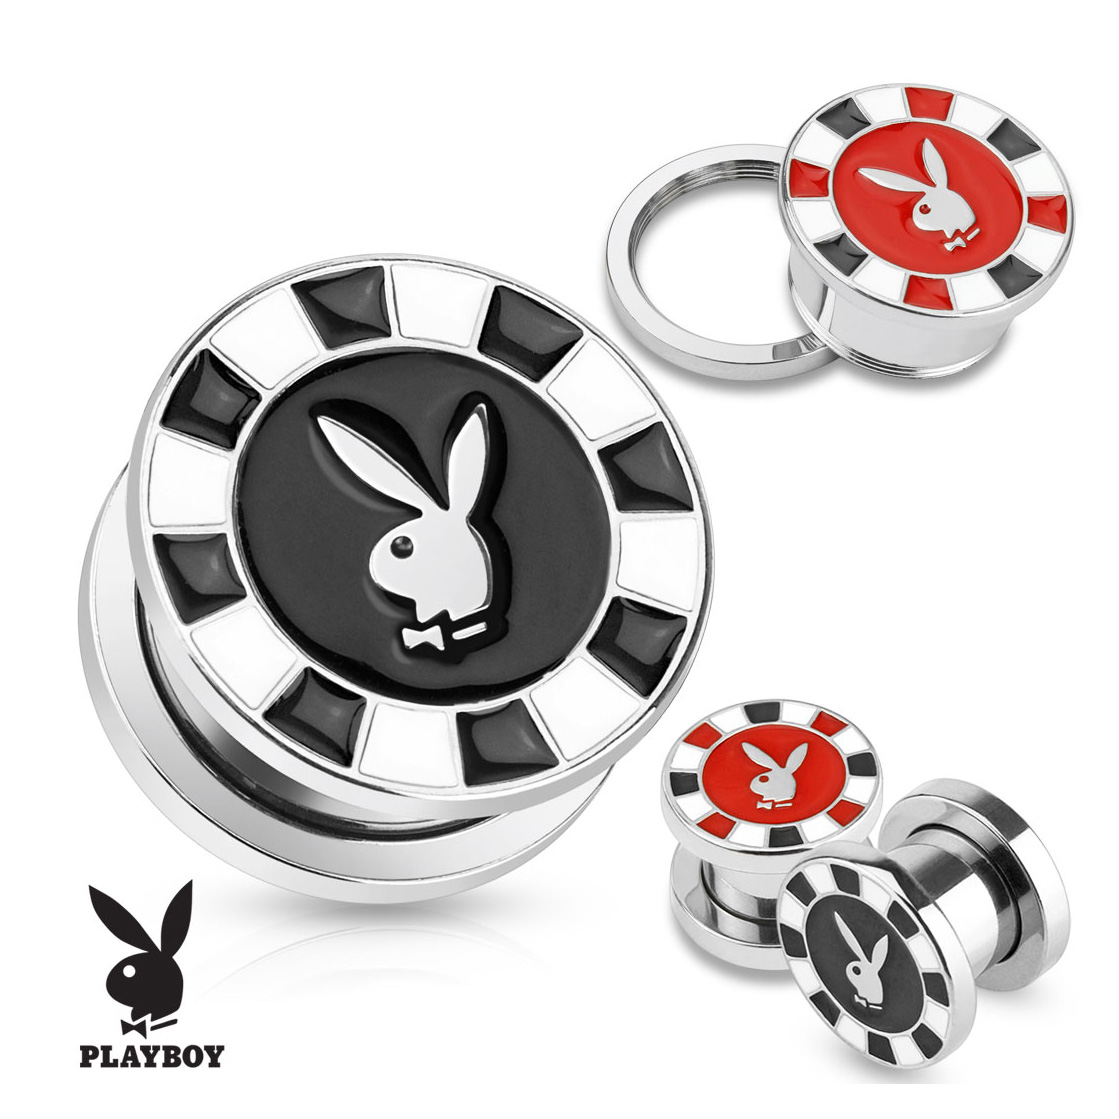 Playboy™ Plug aus Chirurgenstahl mit Pokerjeton